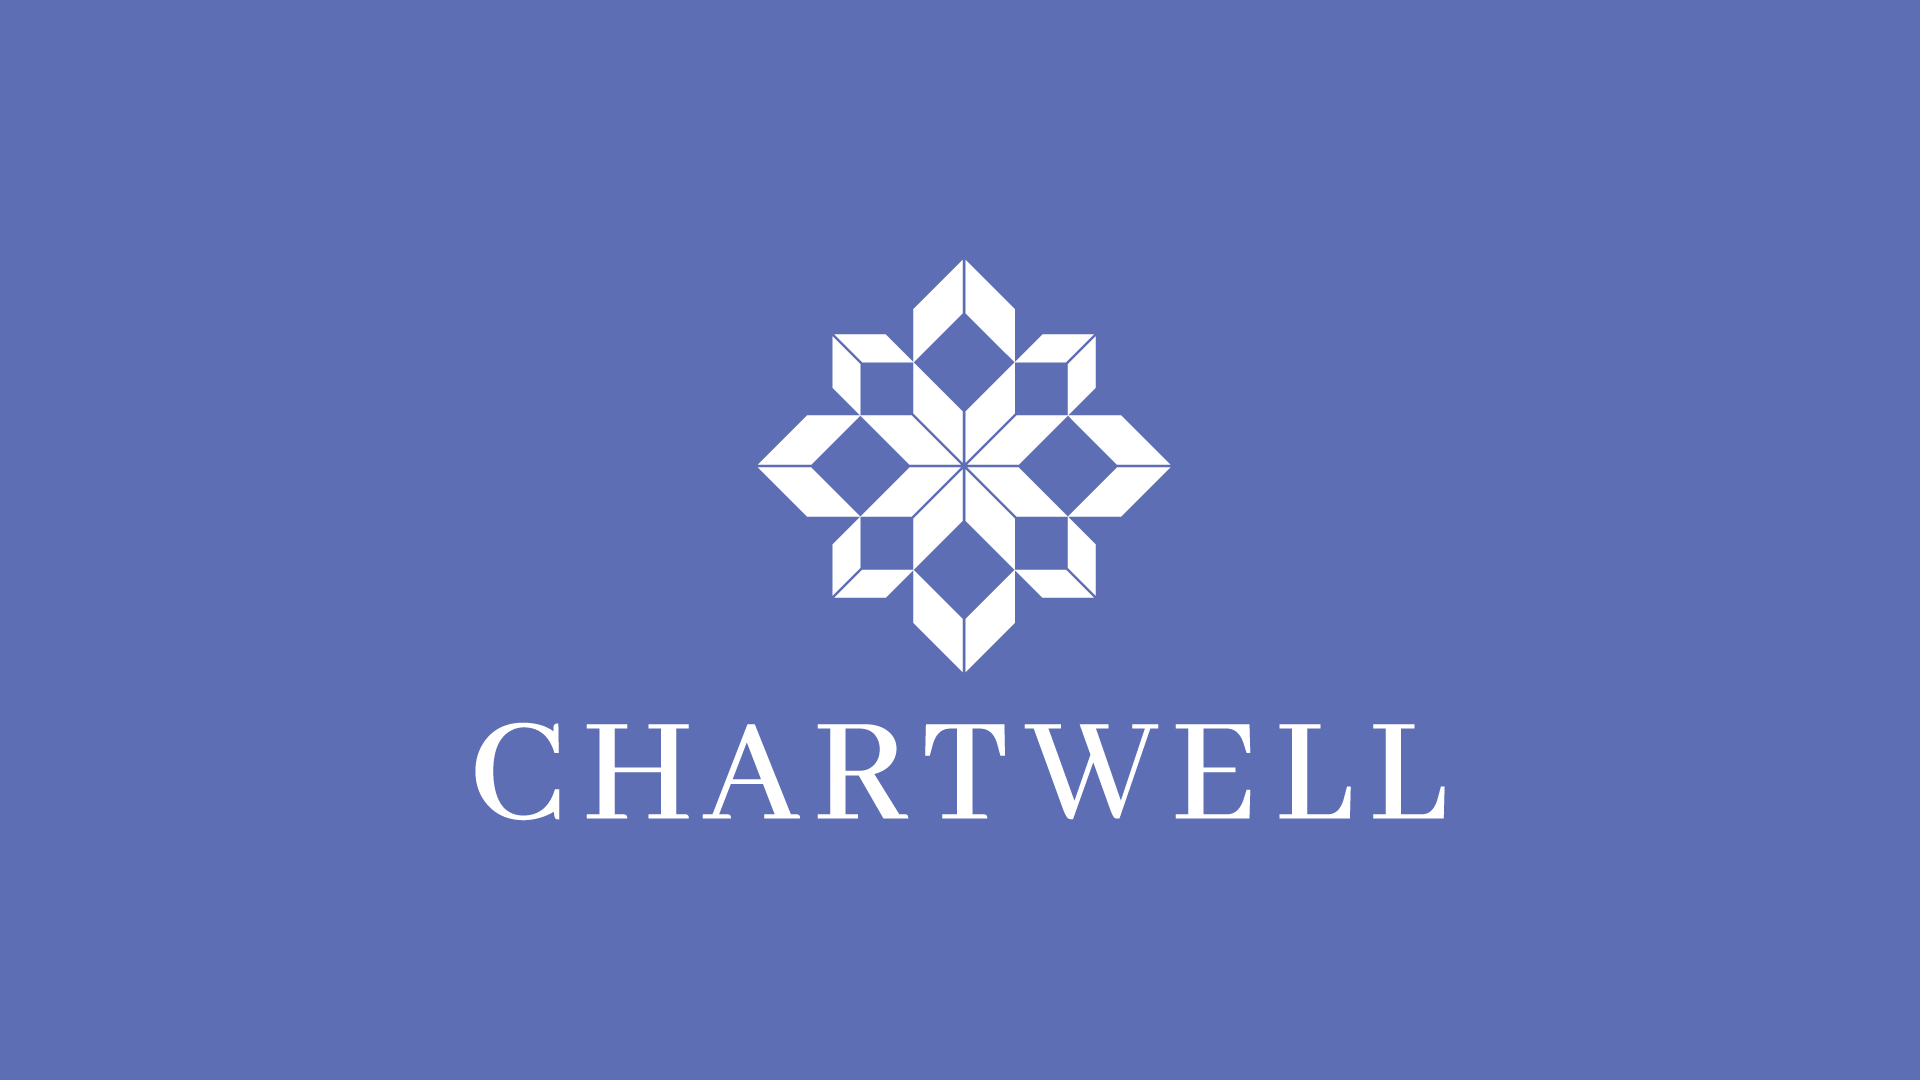 Chartwell logo on purple background